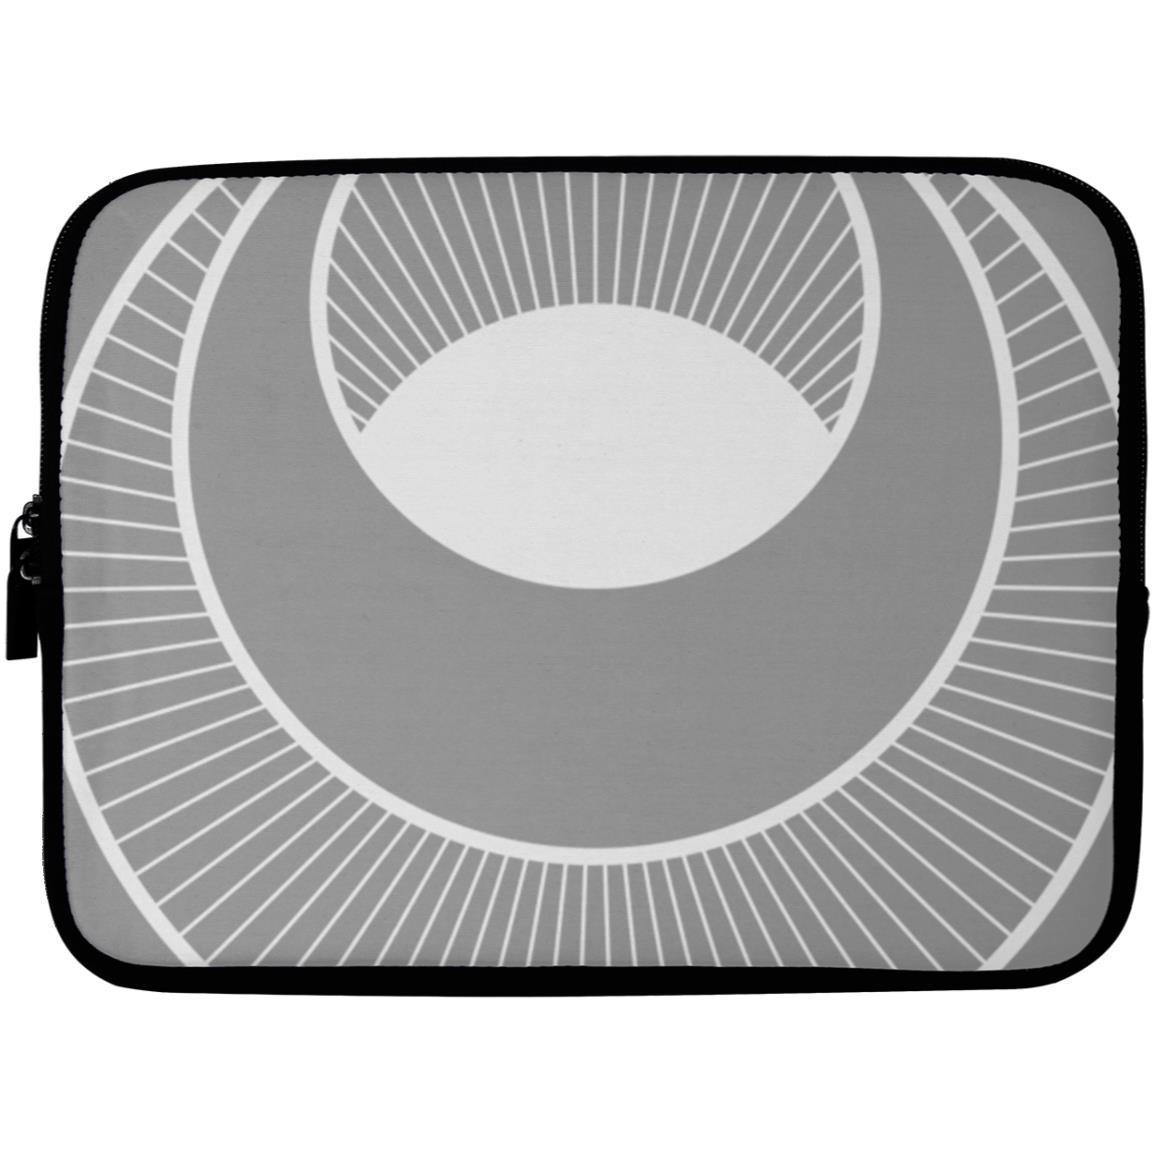 Crop Circle Laptop Sleeve - Morgan´s Hill 2 - Shapes of Wisdom